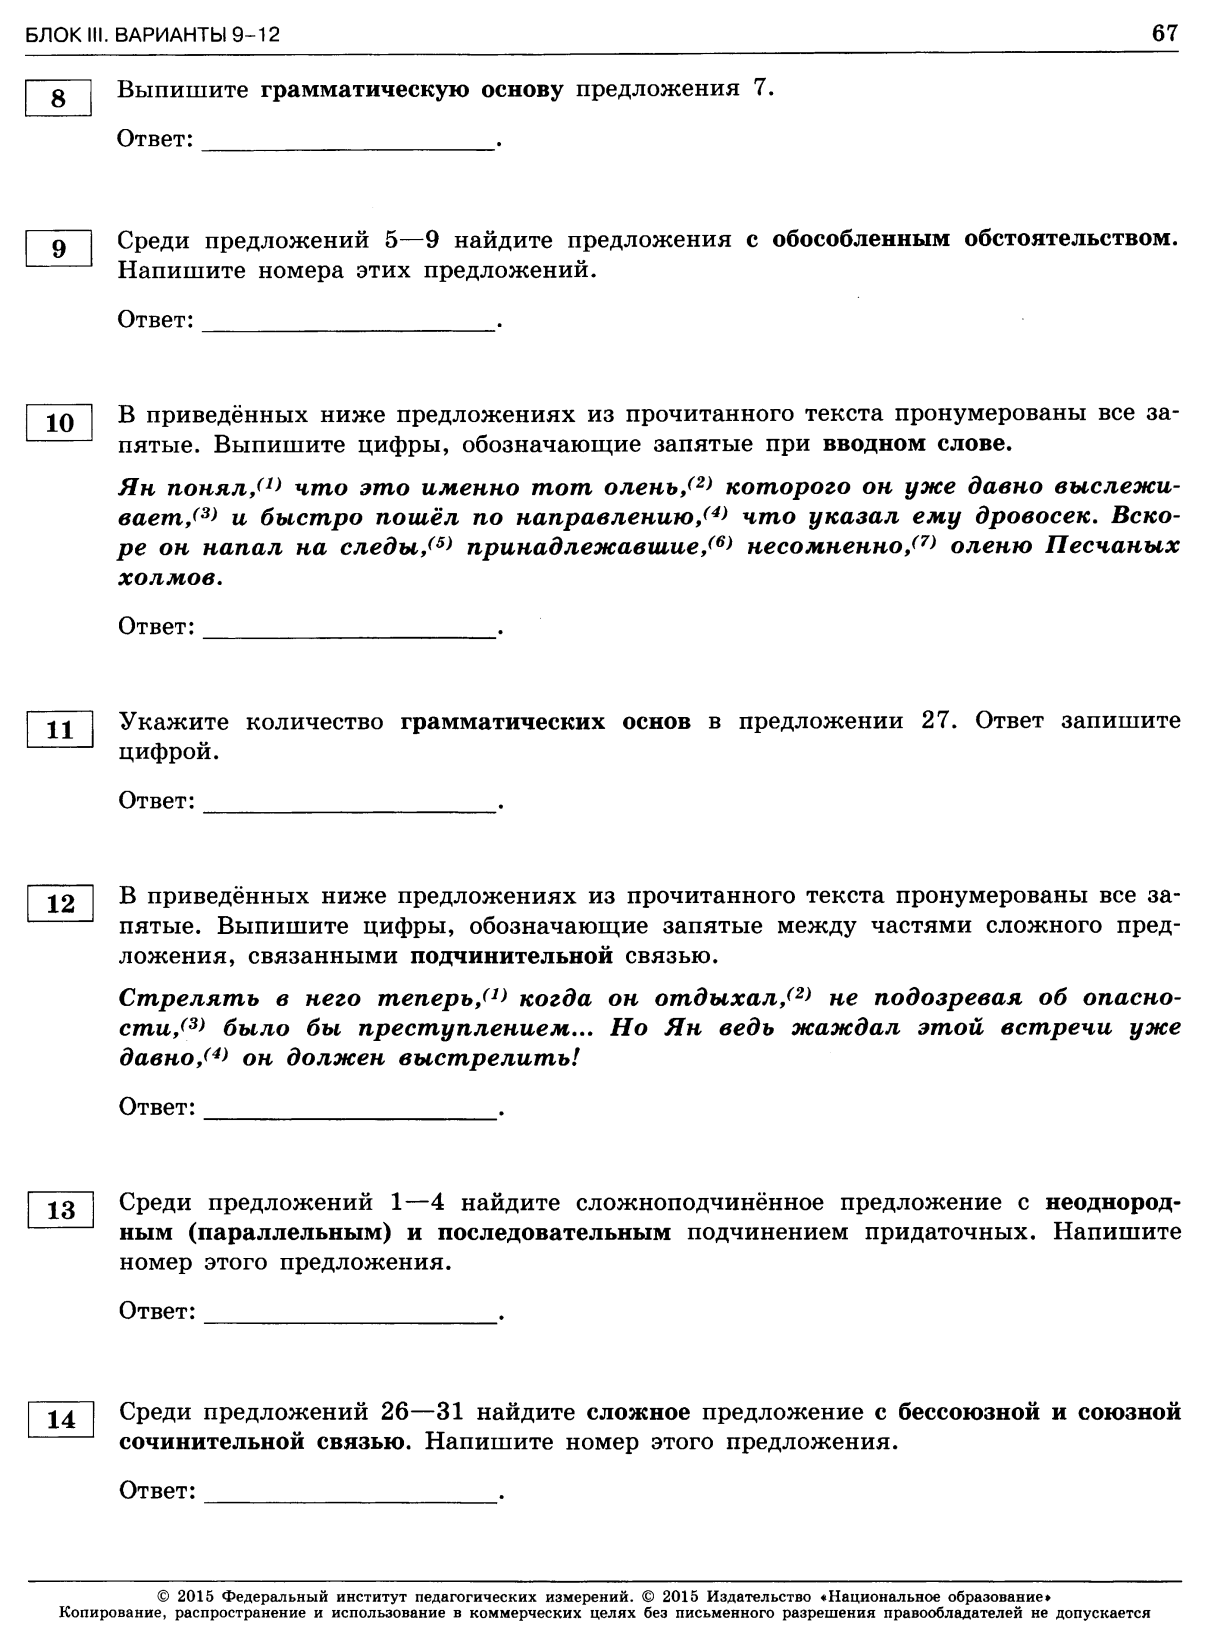 Рабочая программа по русскому языку для 10 класса